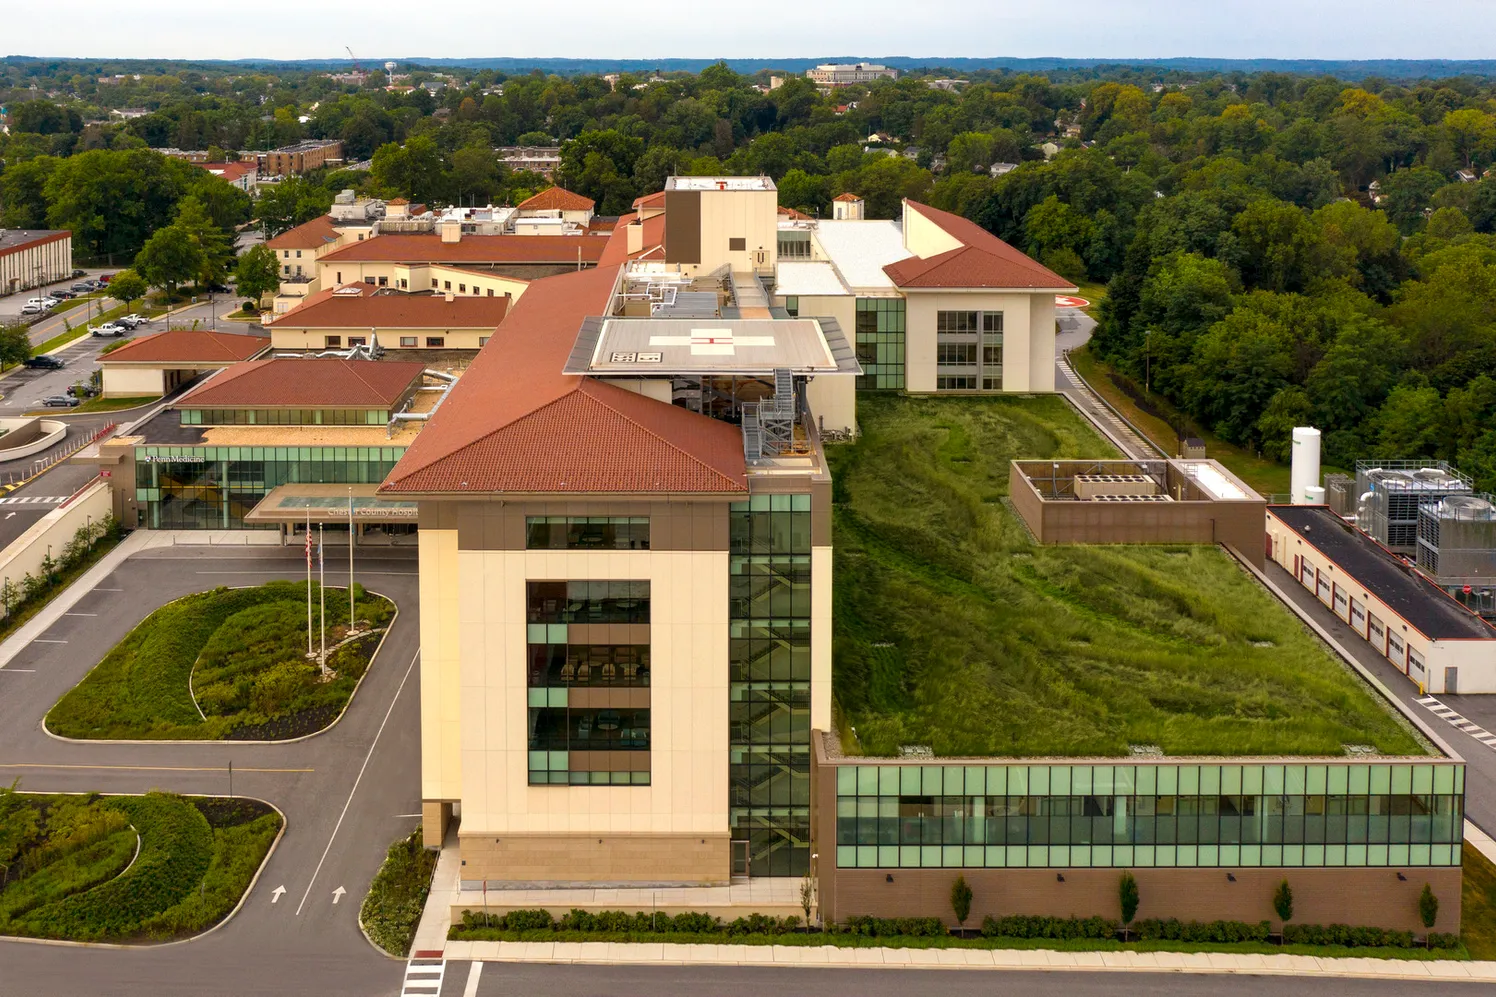 Bethesda Hospital Emergency Department Upgrade - Penn-co Construction